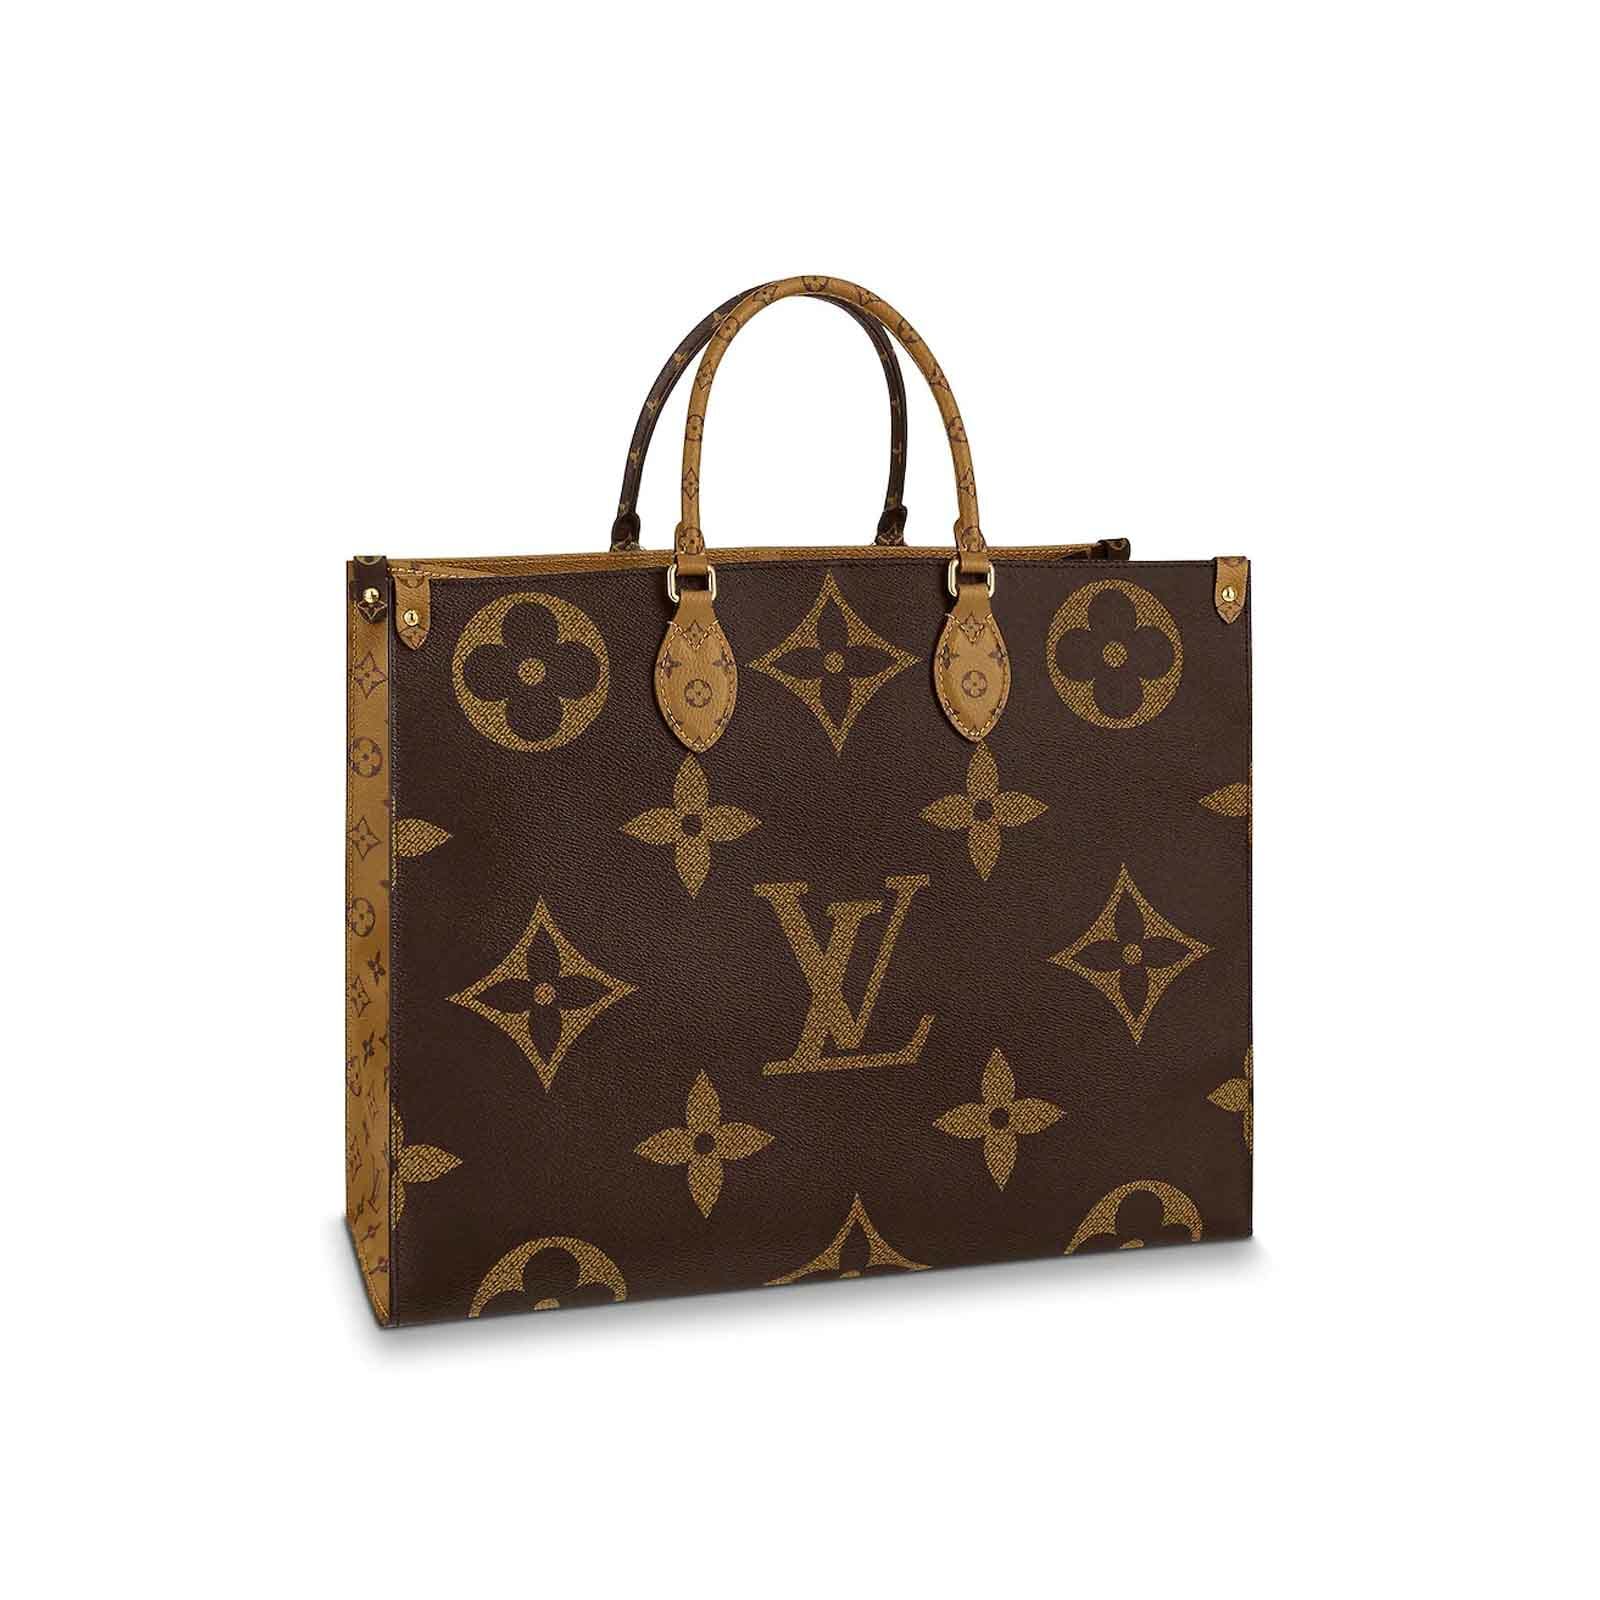 Louis Vuitton OnTheGo Giant Monogram Tote Bag GM / Large Size